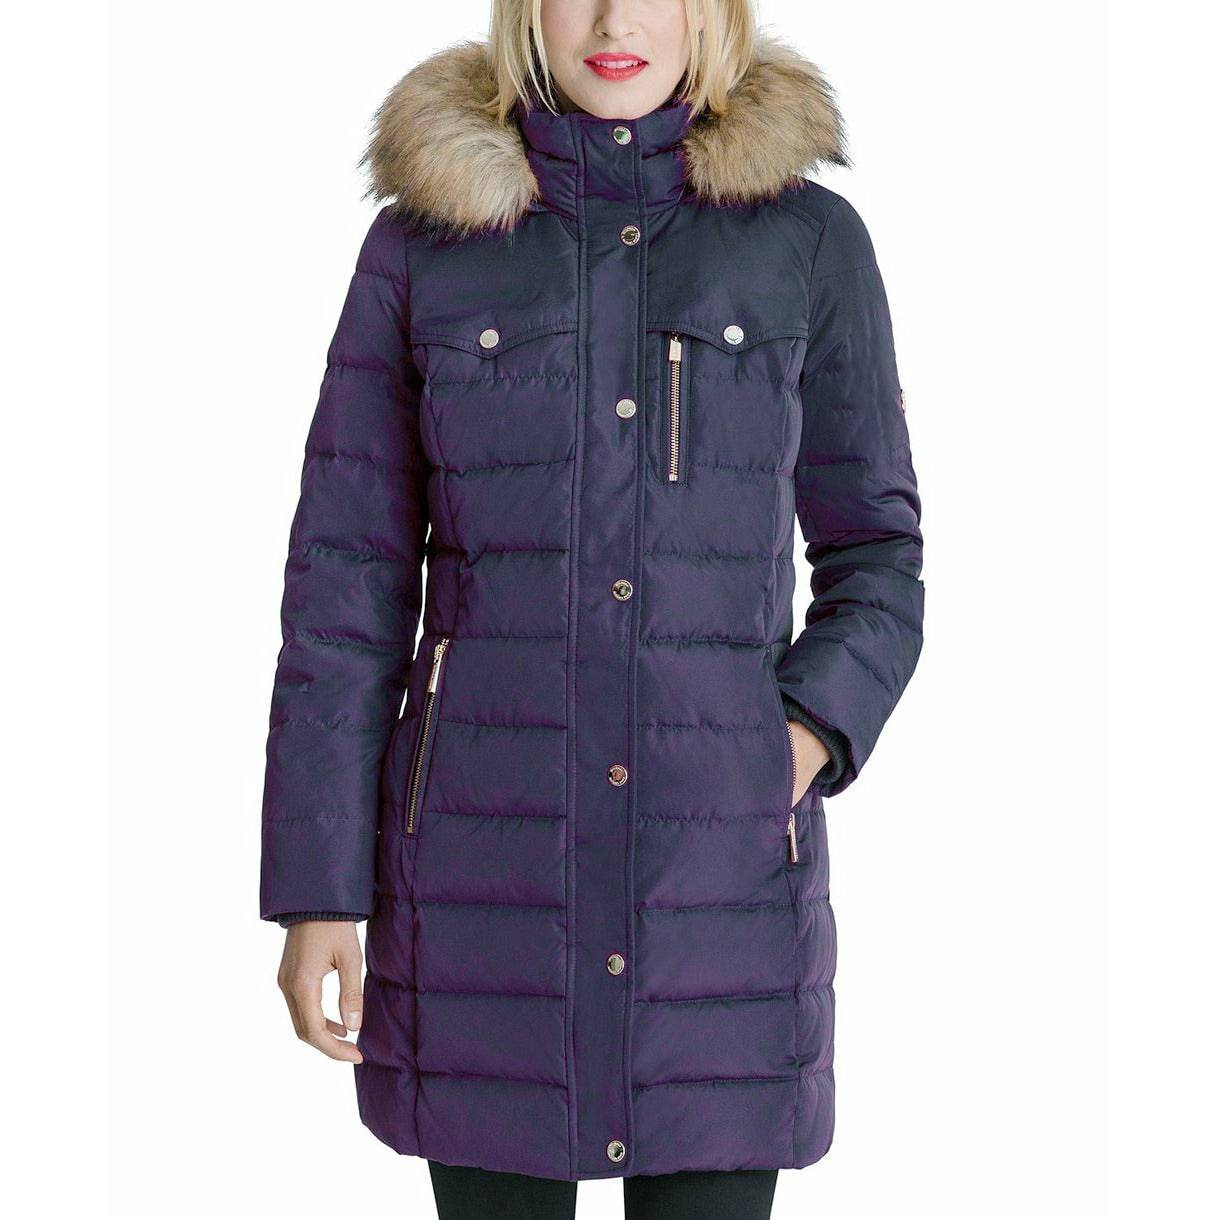 Michael Kors Women's Puffer Down Winter Coat | eBay